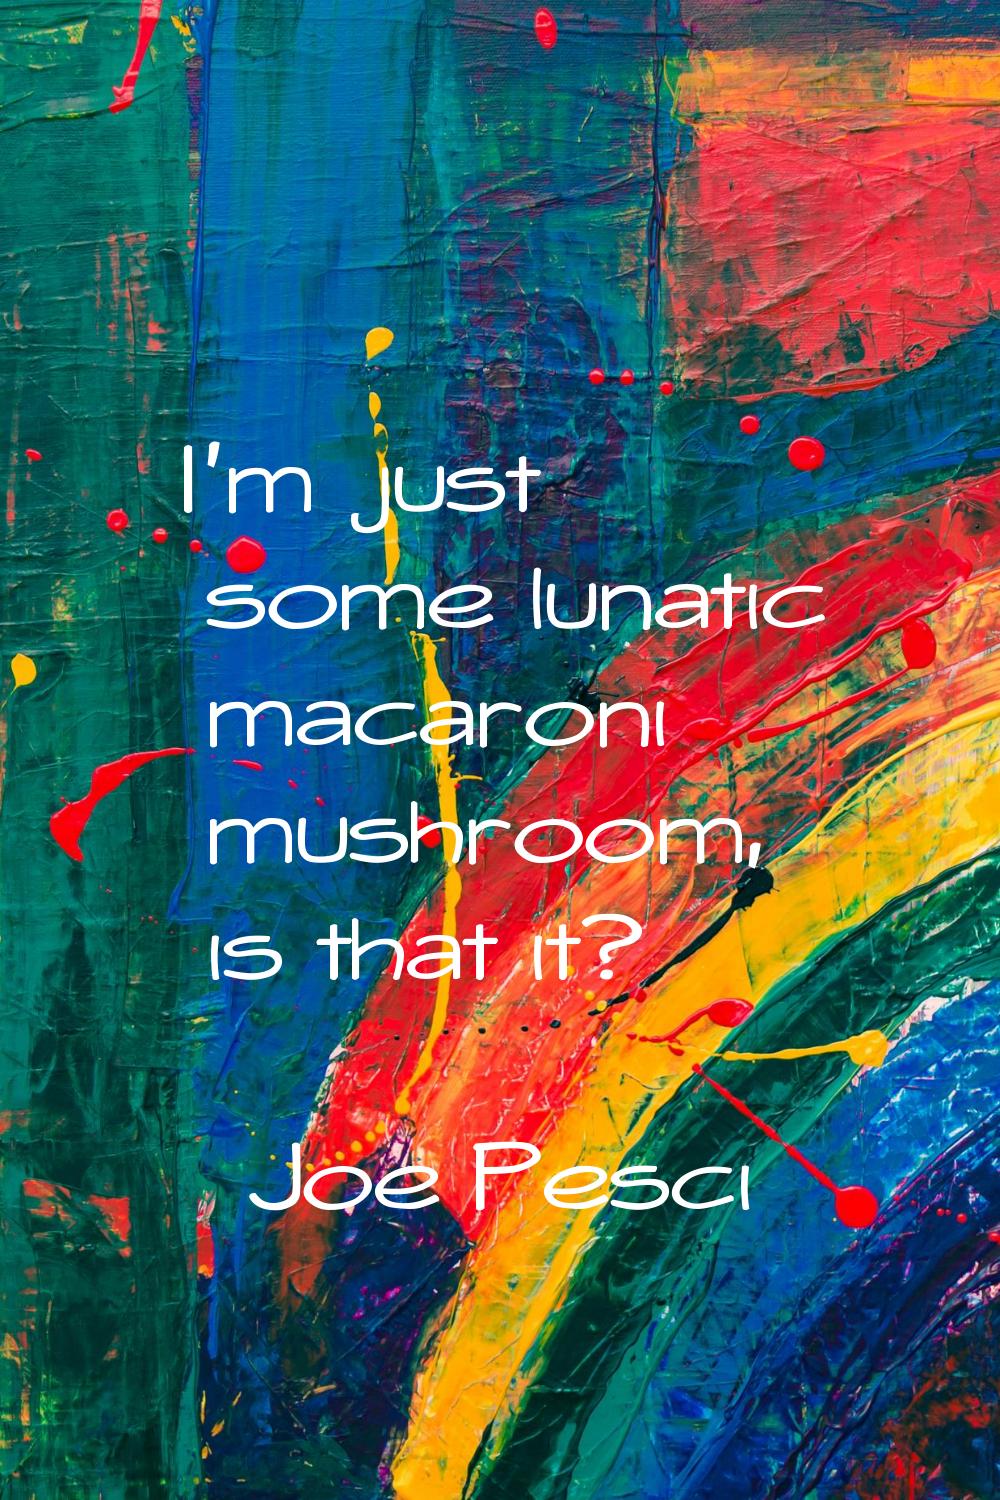 I'm just some lunatic macaroni mushroom, is that it?